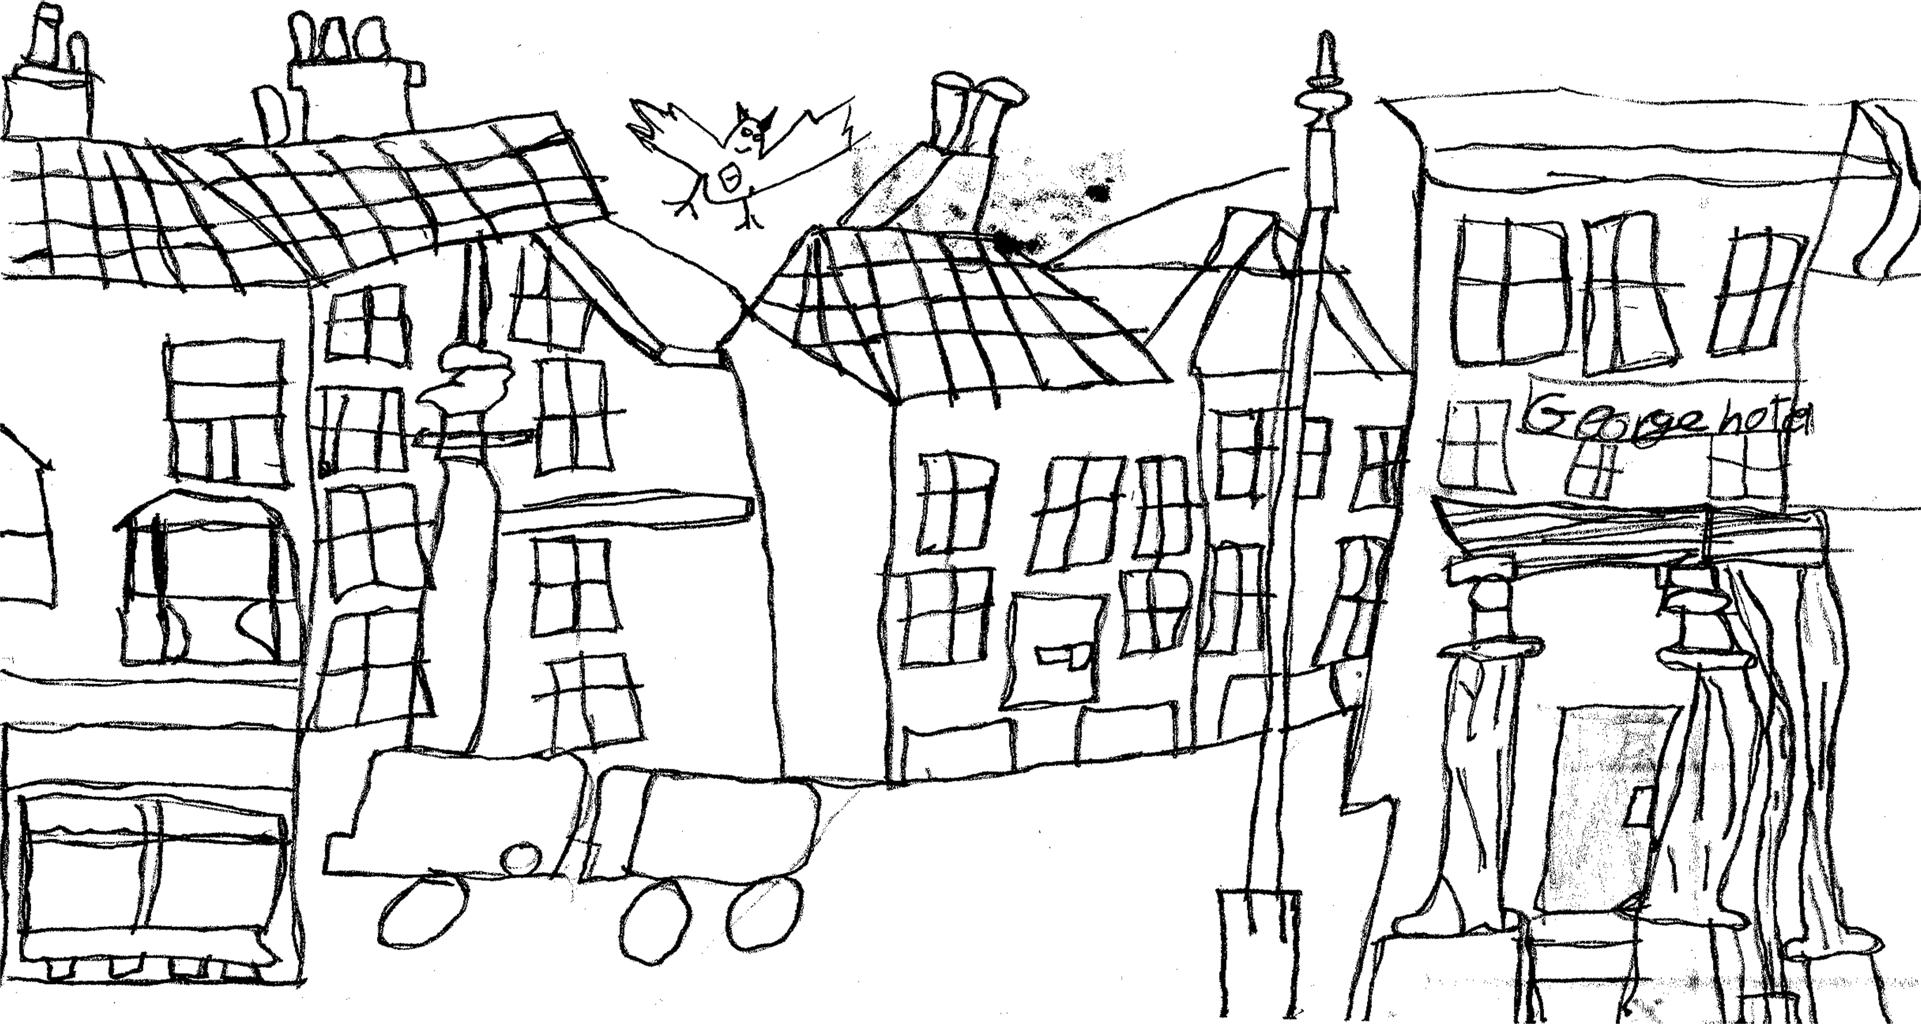 Illustration by children of St George's School